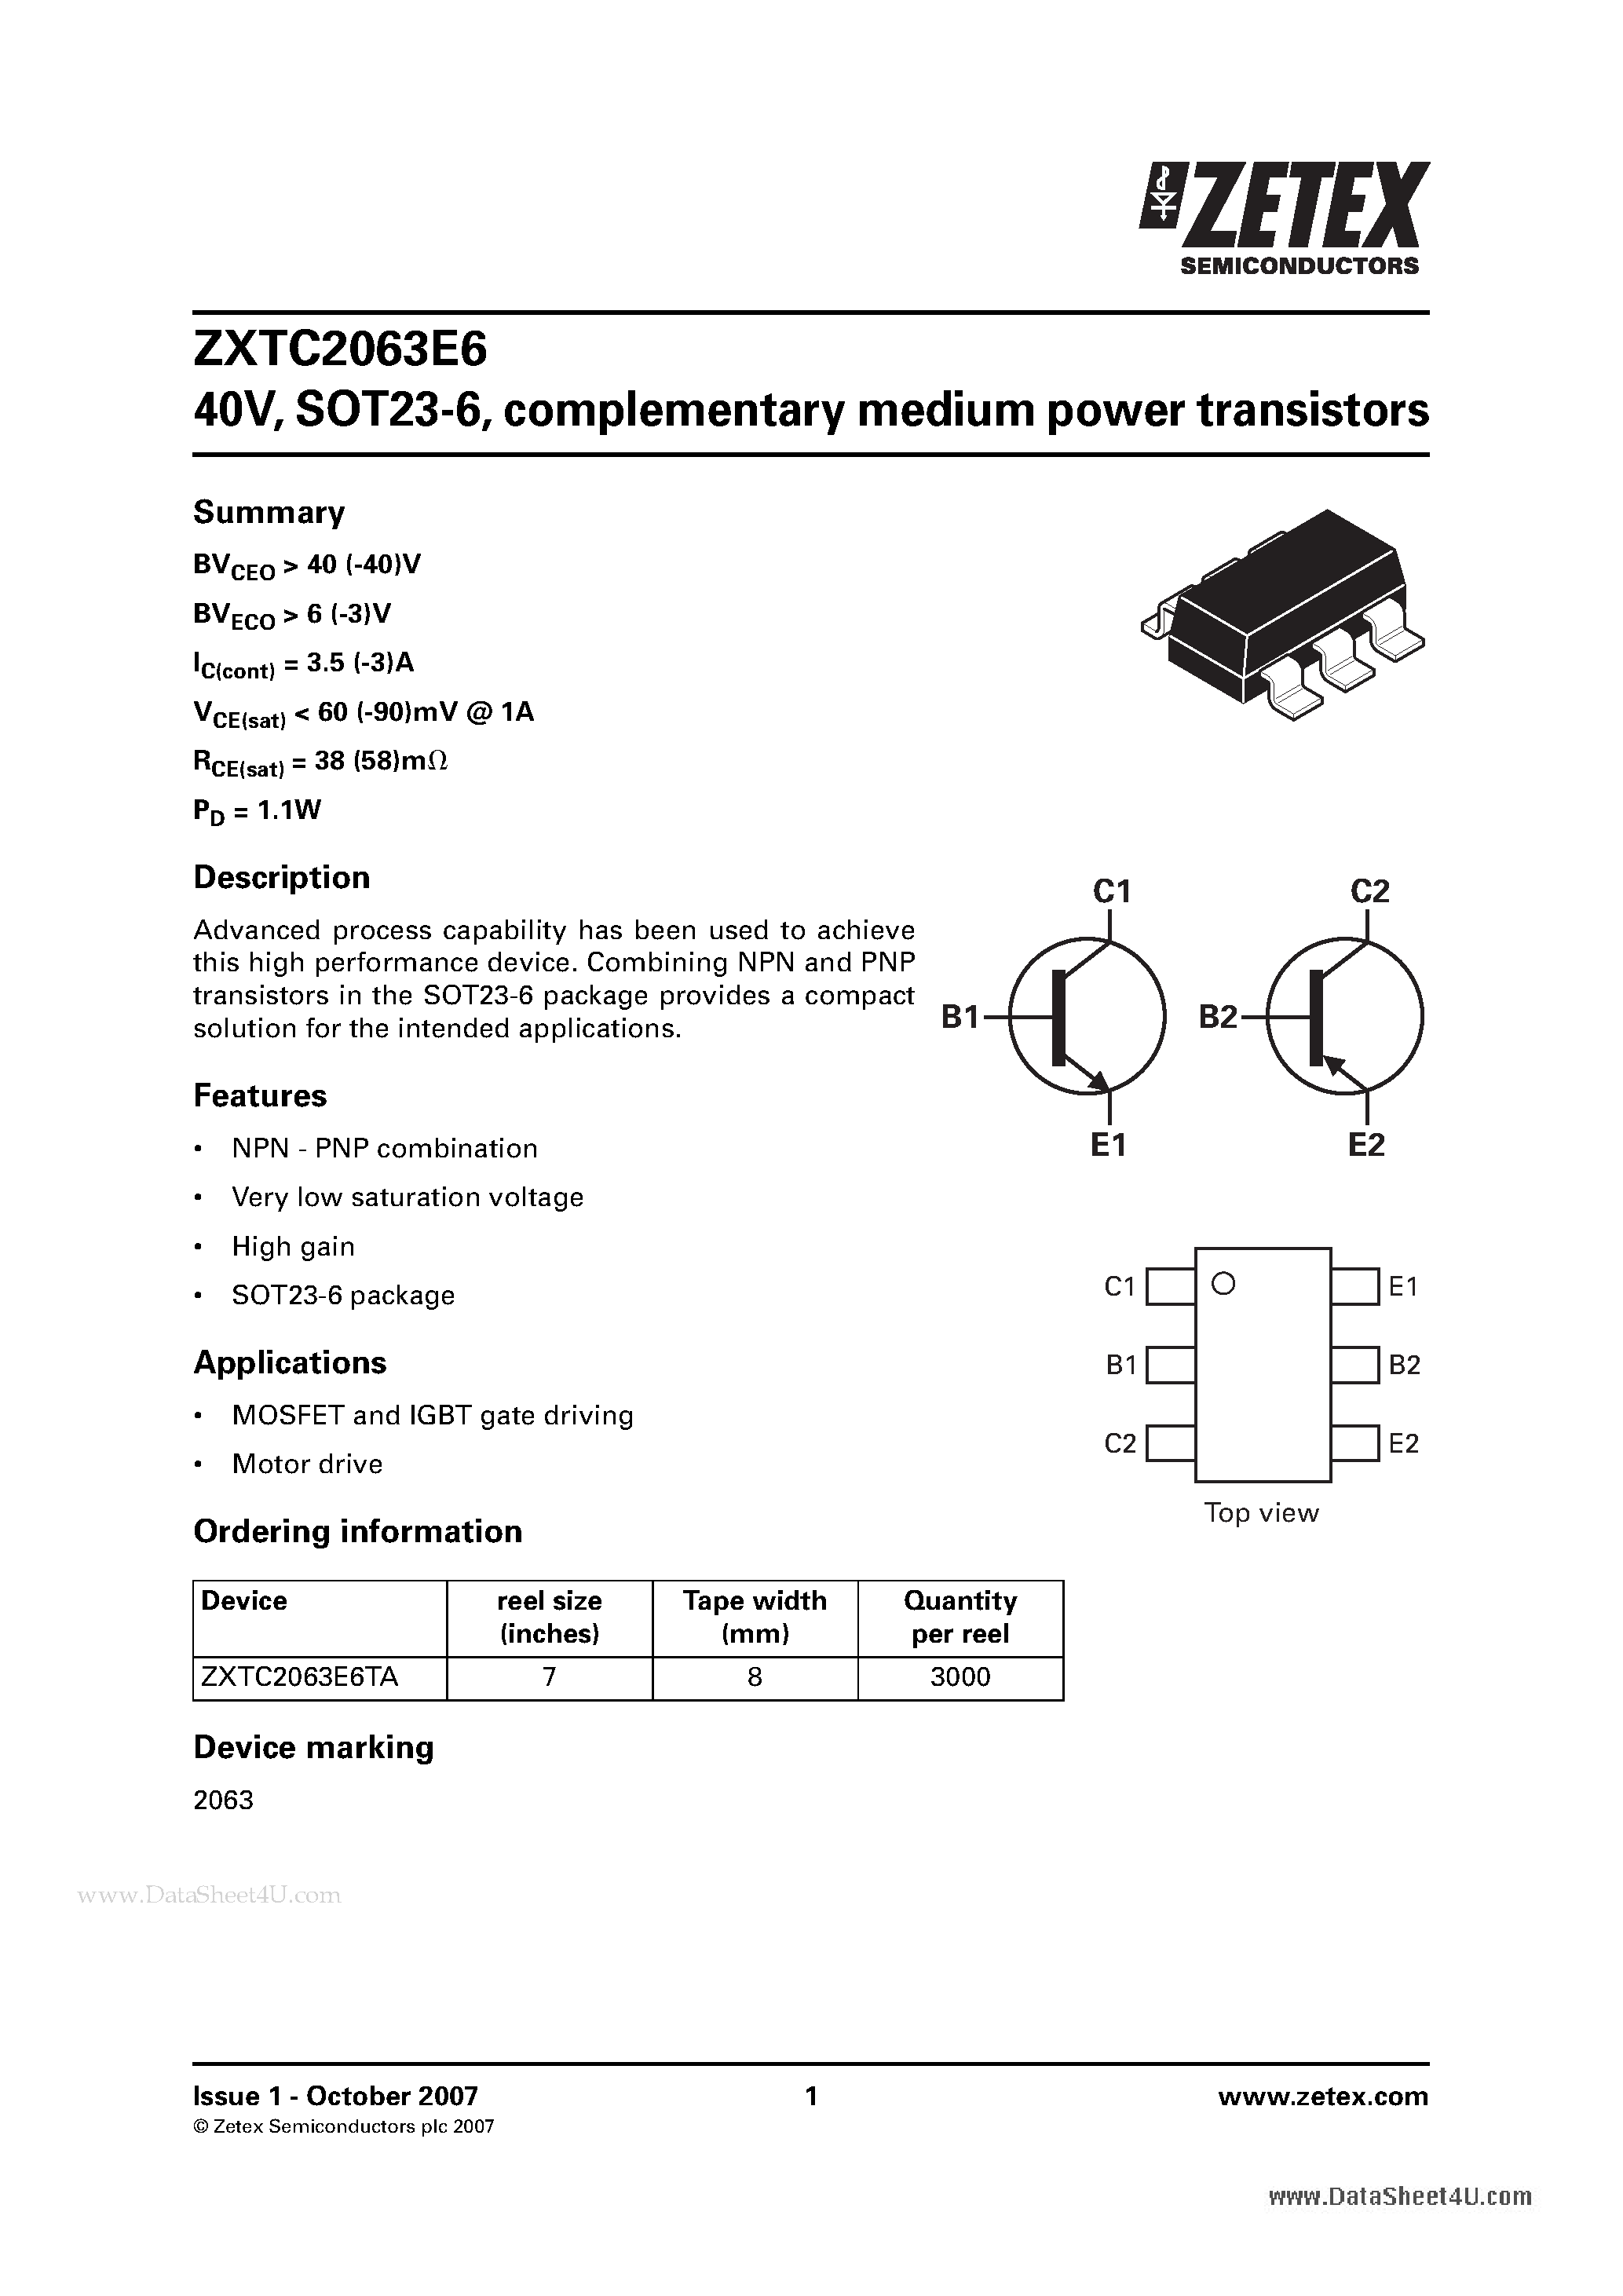 Datasheet ZXTC2063E6 - 40V SOT23-6 complementary medium power transistors page 1